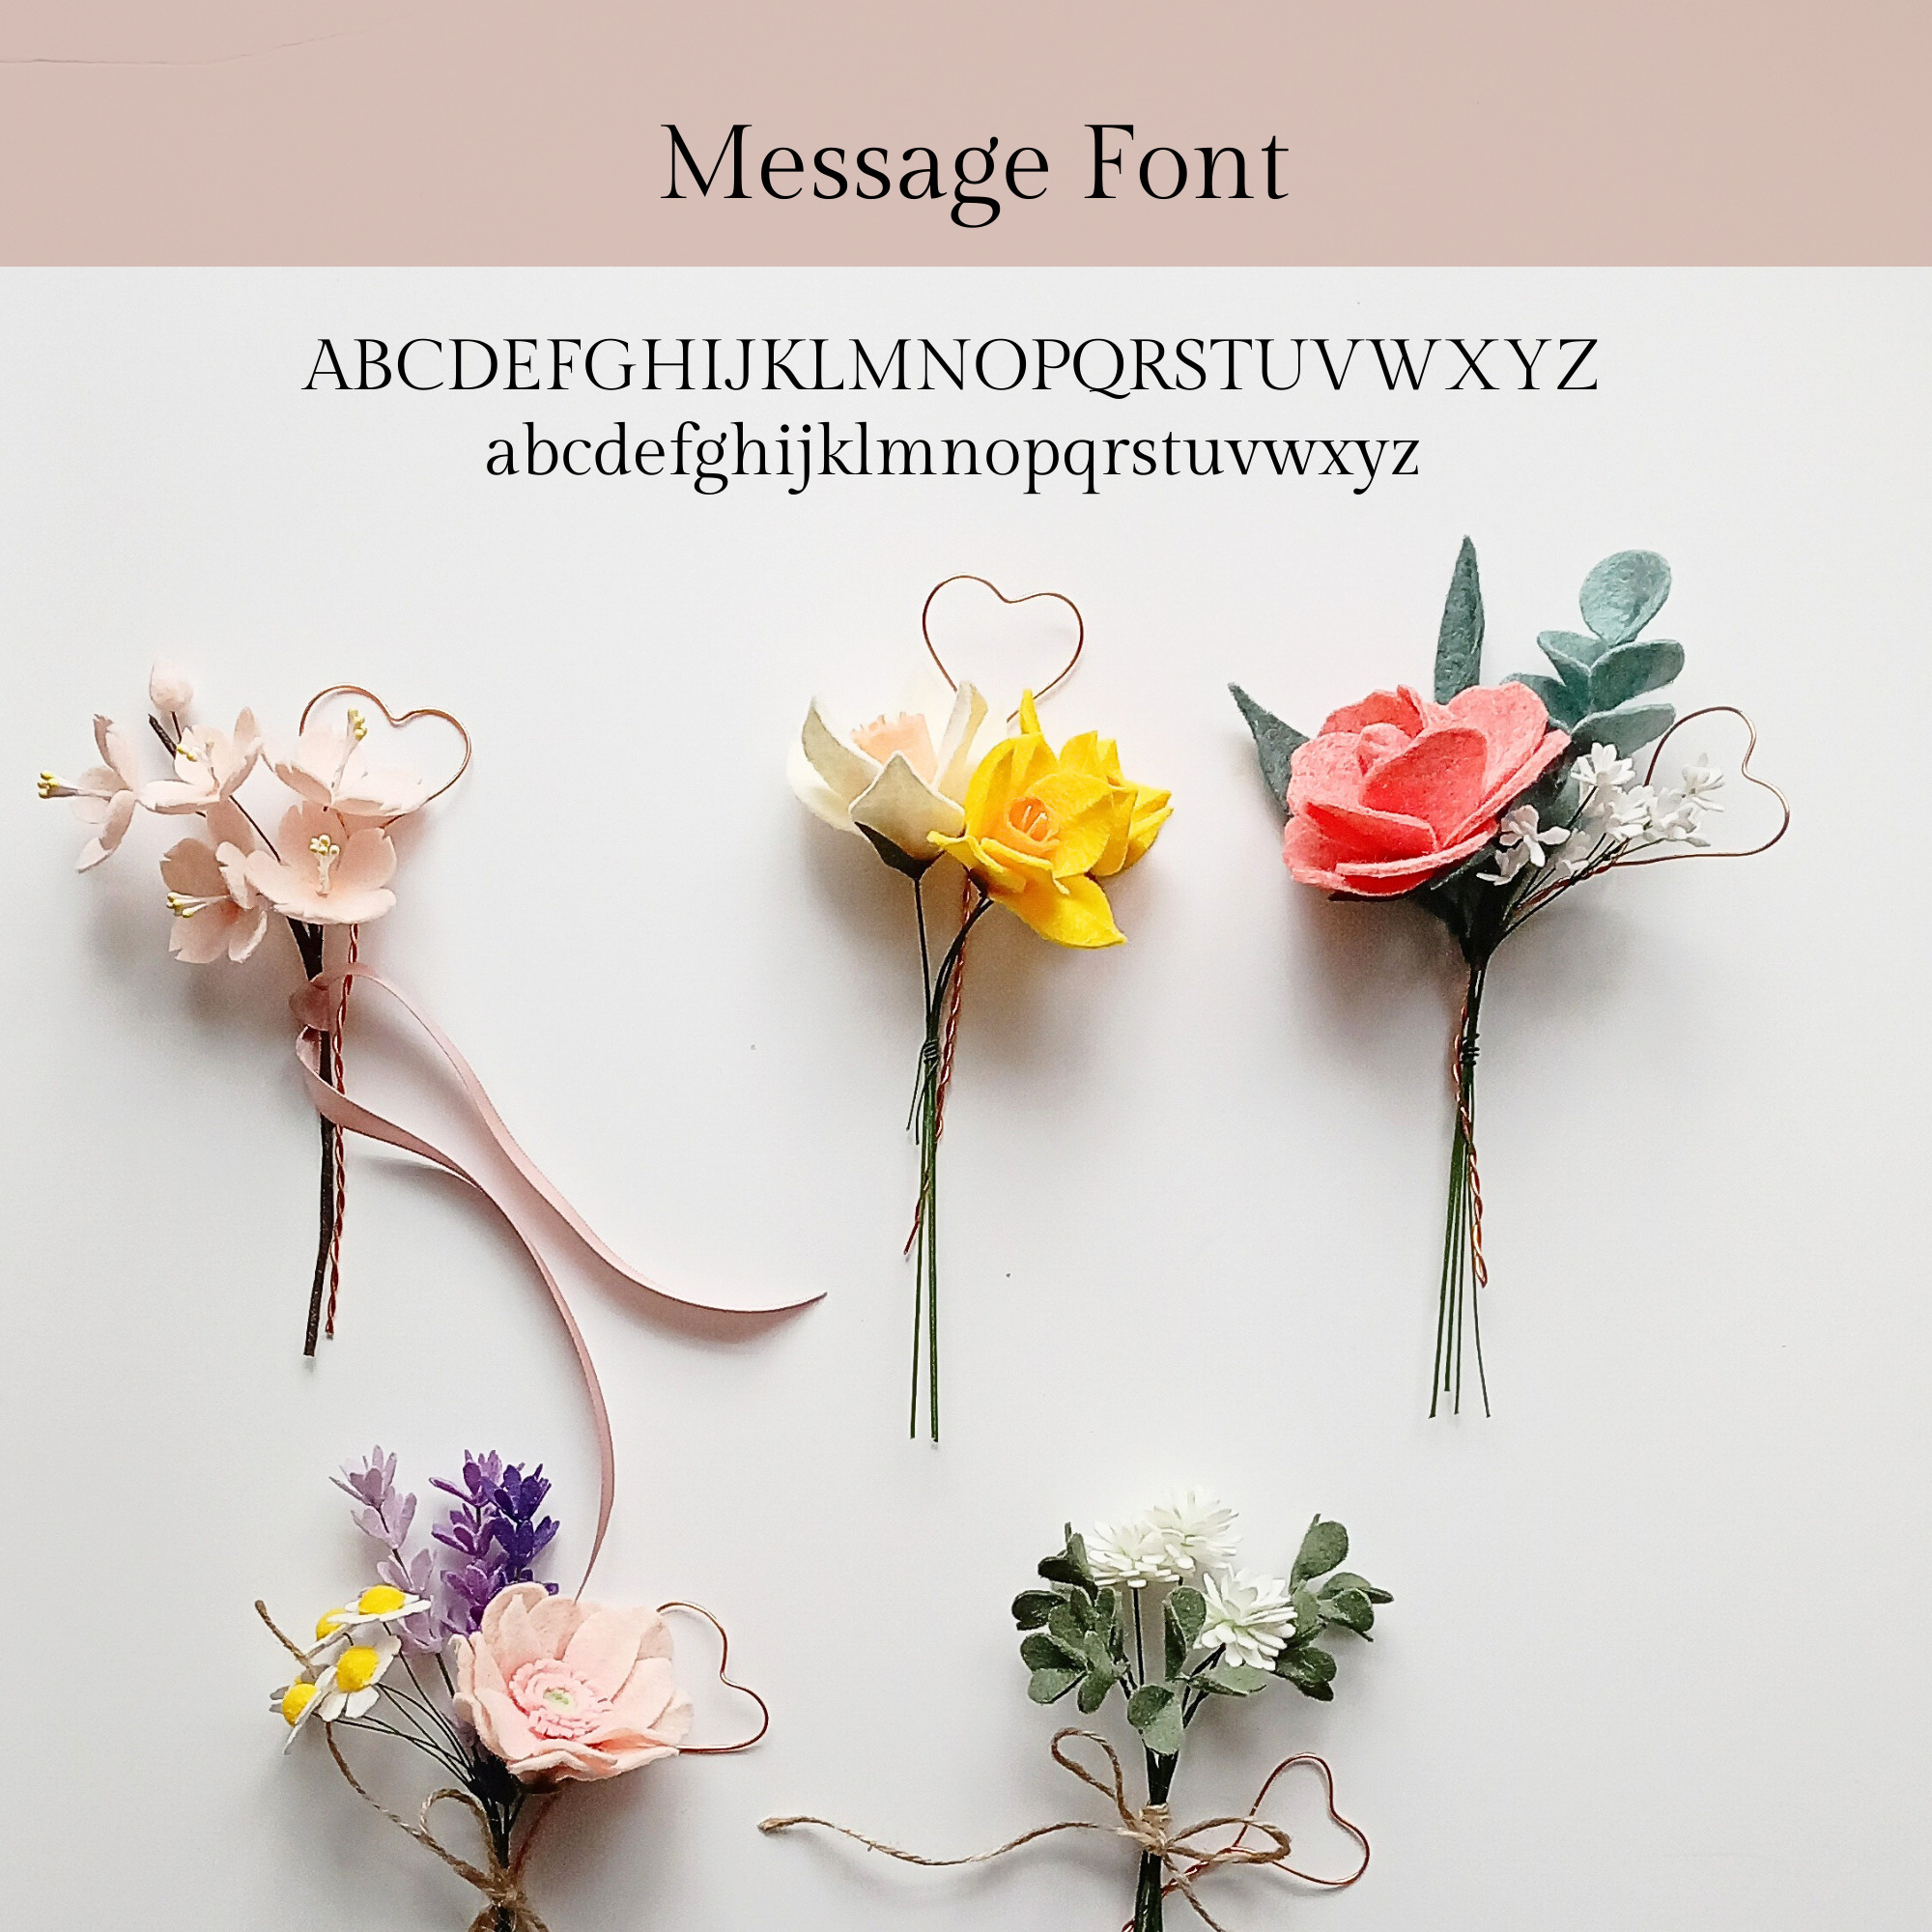 Typewriter font message flower card